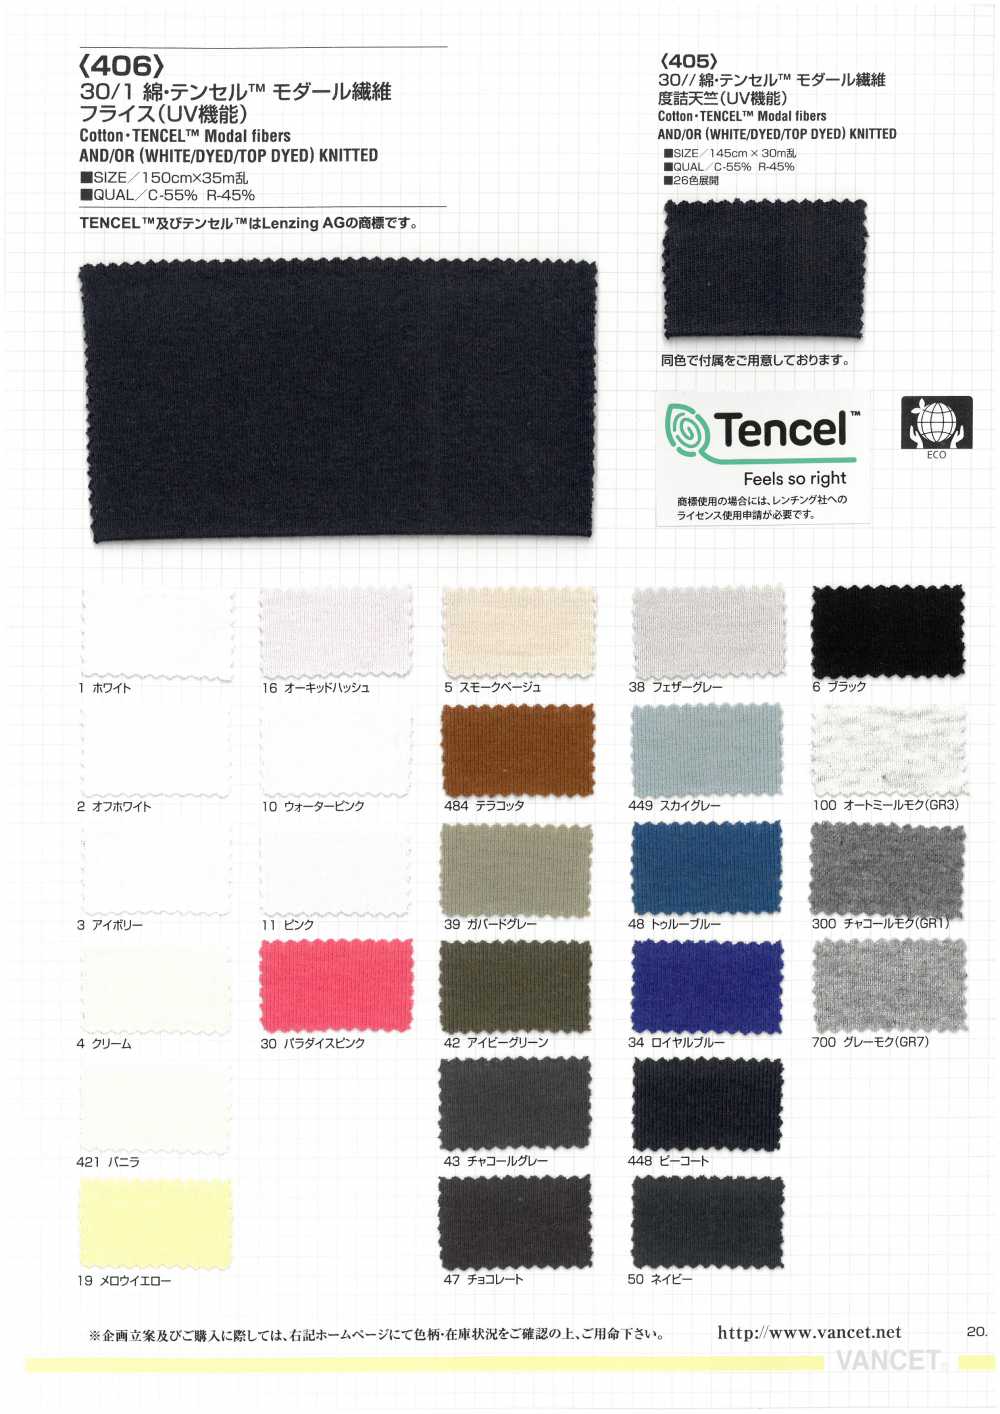 406 Costilla Circular De Fibra Modal 30/1 Algodón / Tencel ™ (Función UV)[Fabrica Textil] VANCET